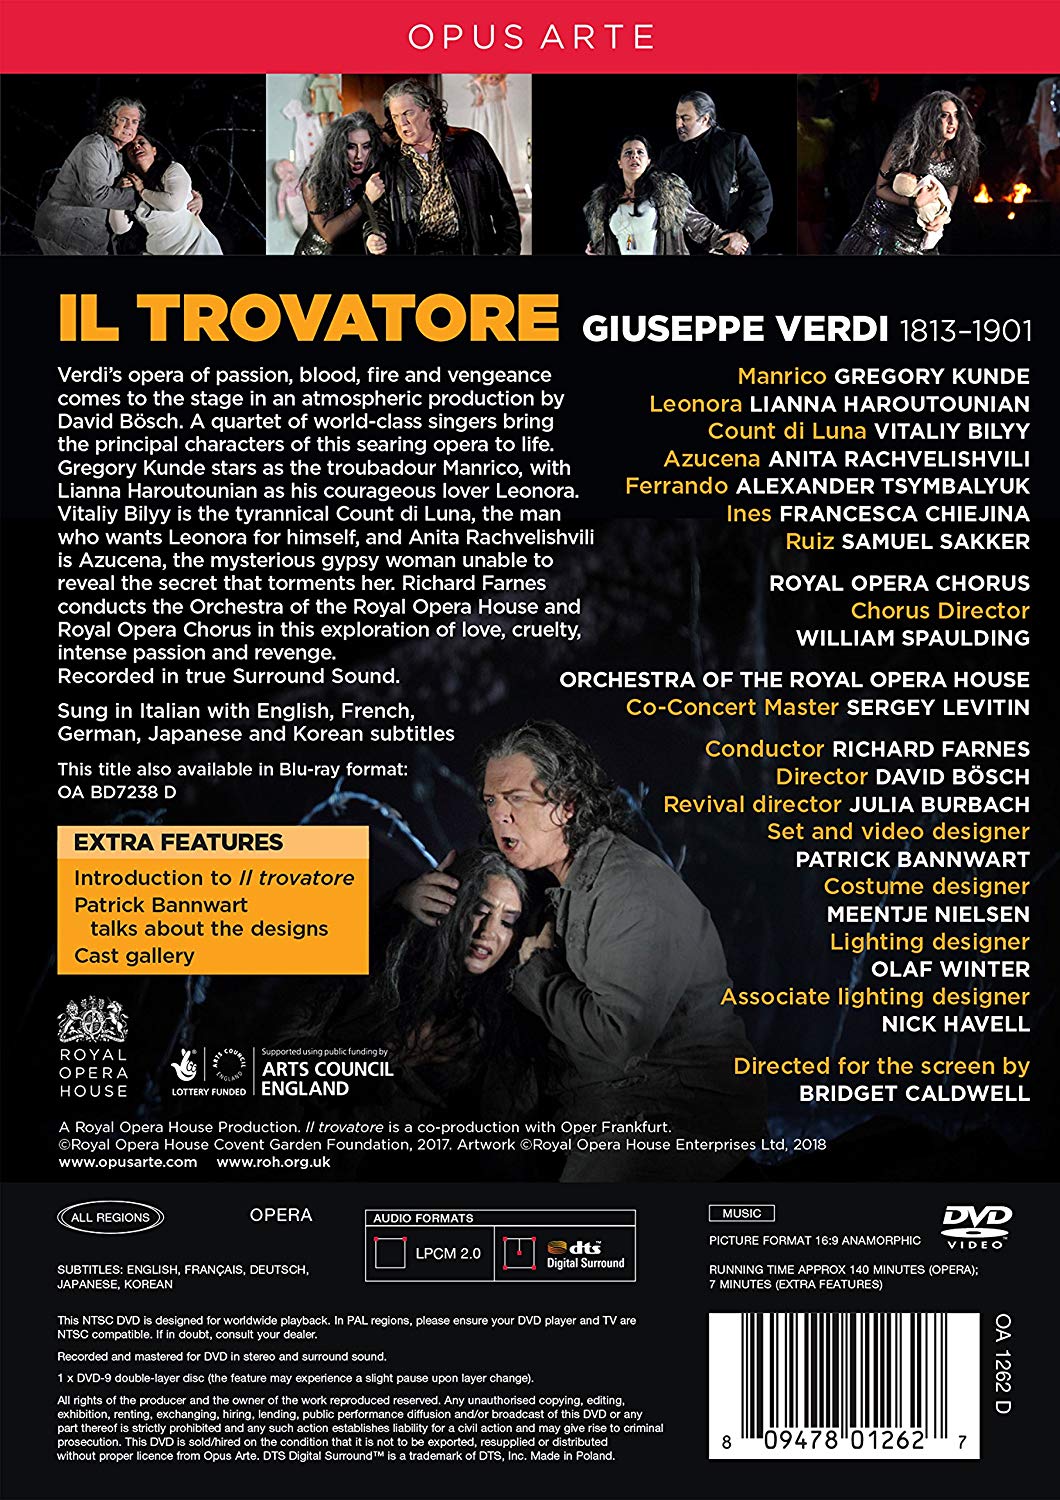 Gregory Kunde / Richard Farnes 베르디: 일 트로바토레 (Verdi: Il Trovatore)